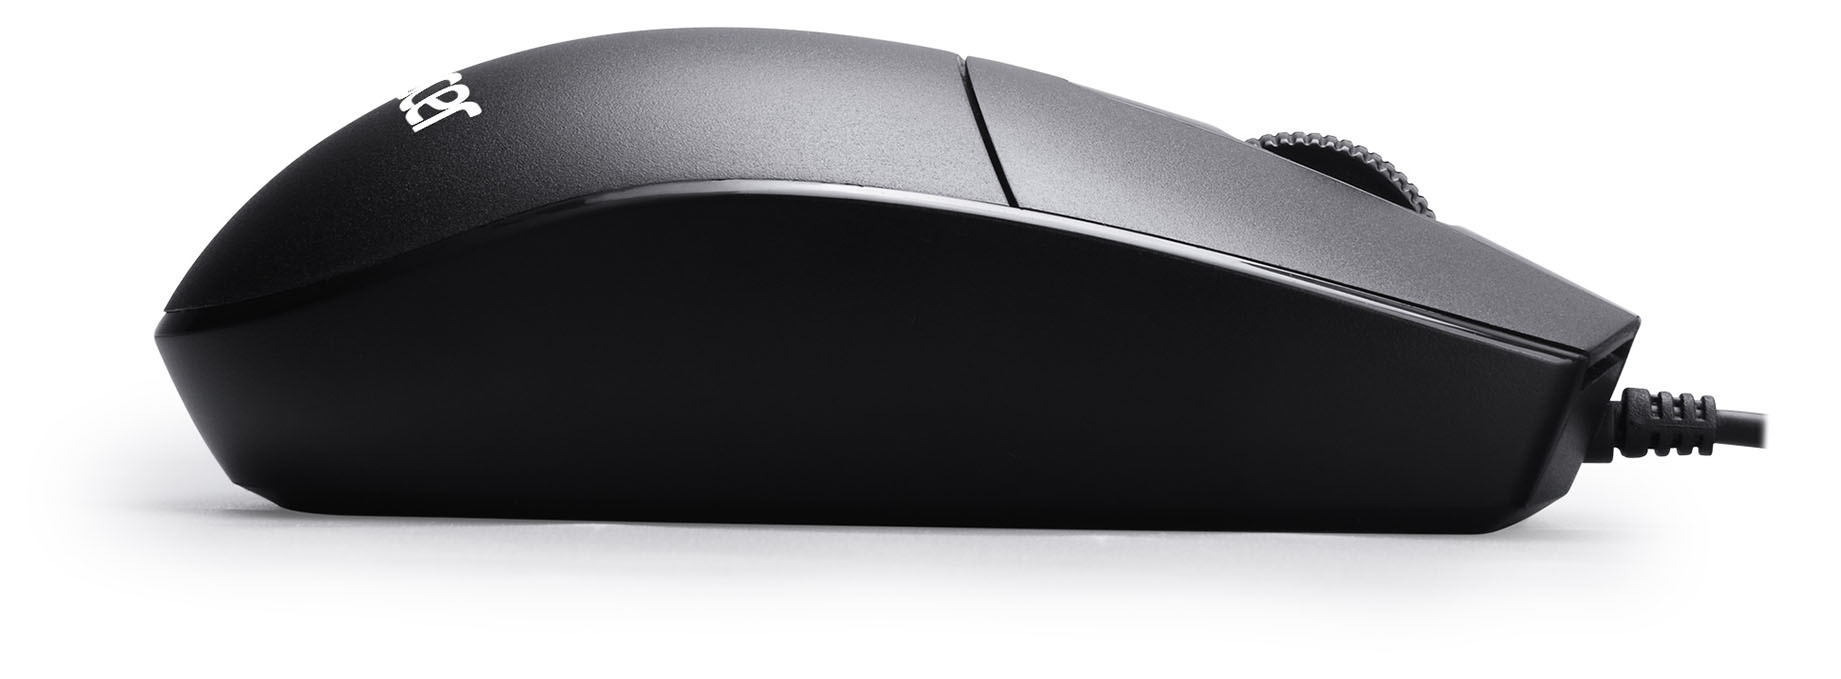 Клавиатура + мышь Acer OMW141 черный (ZL.MCEEE.01M)